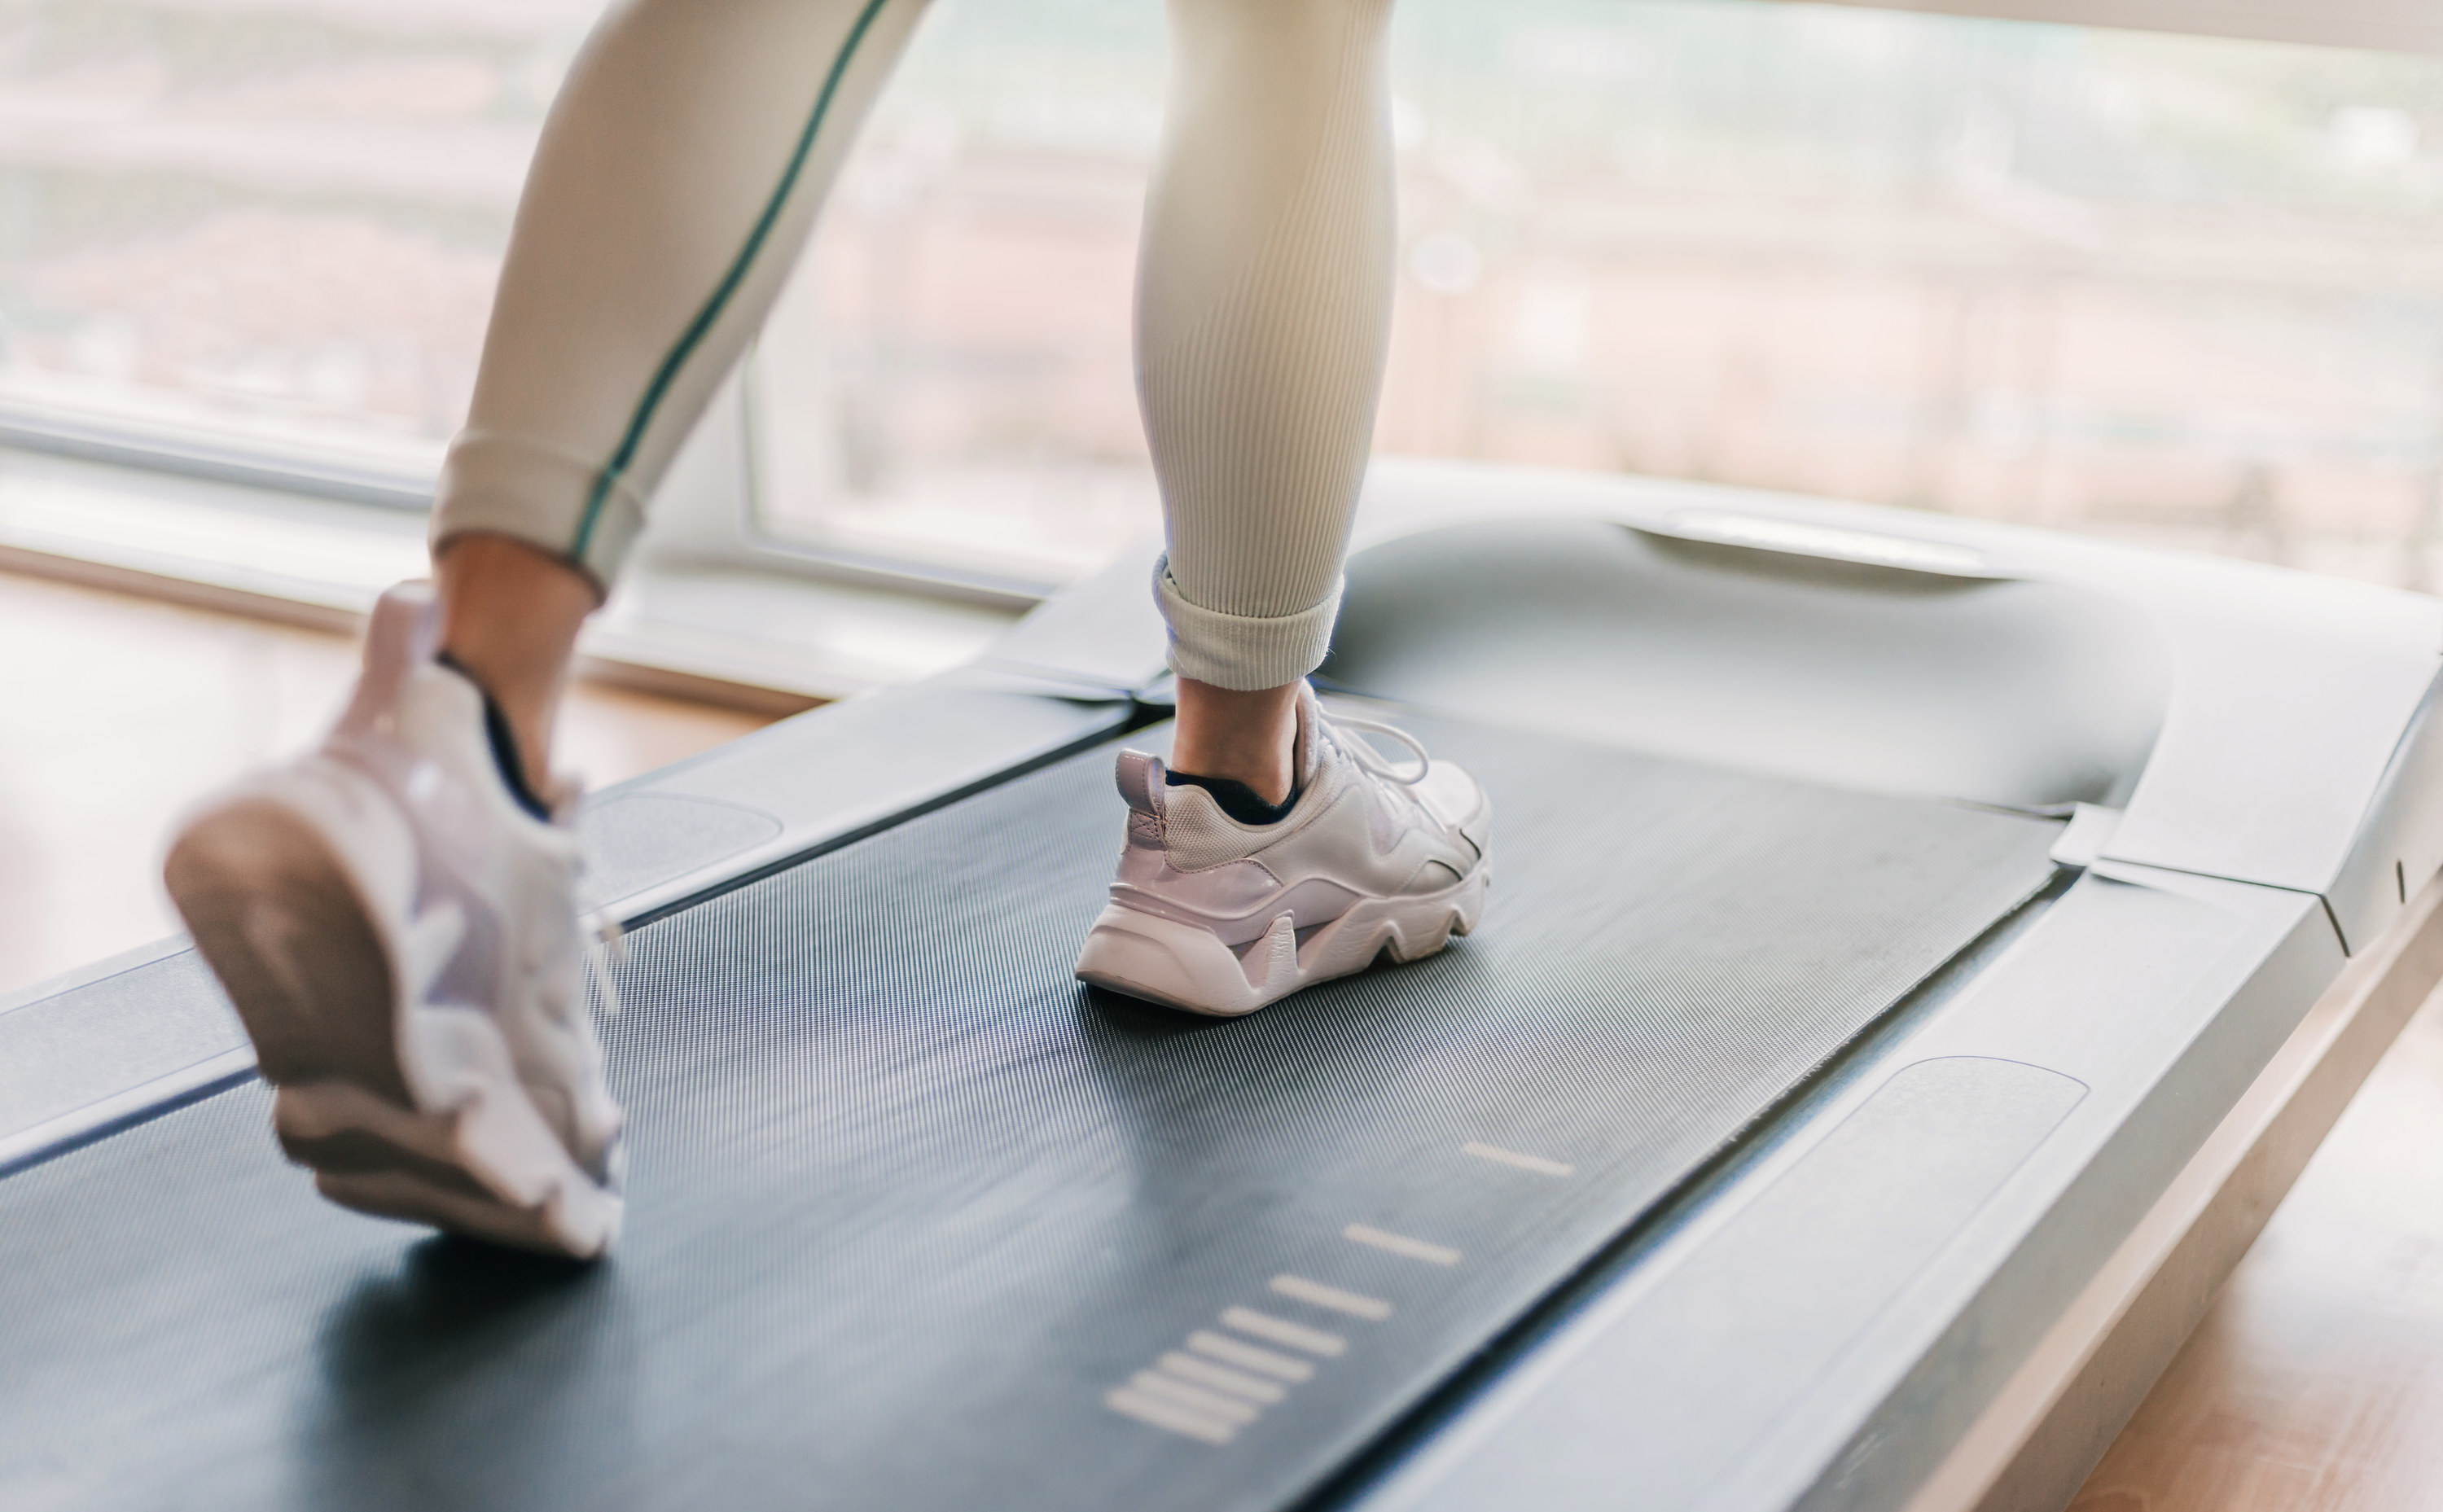 feet walking on a treadmill